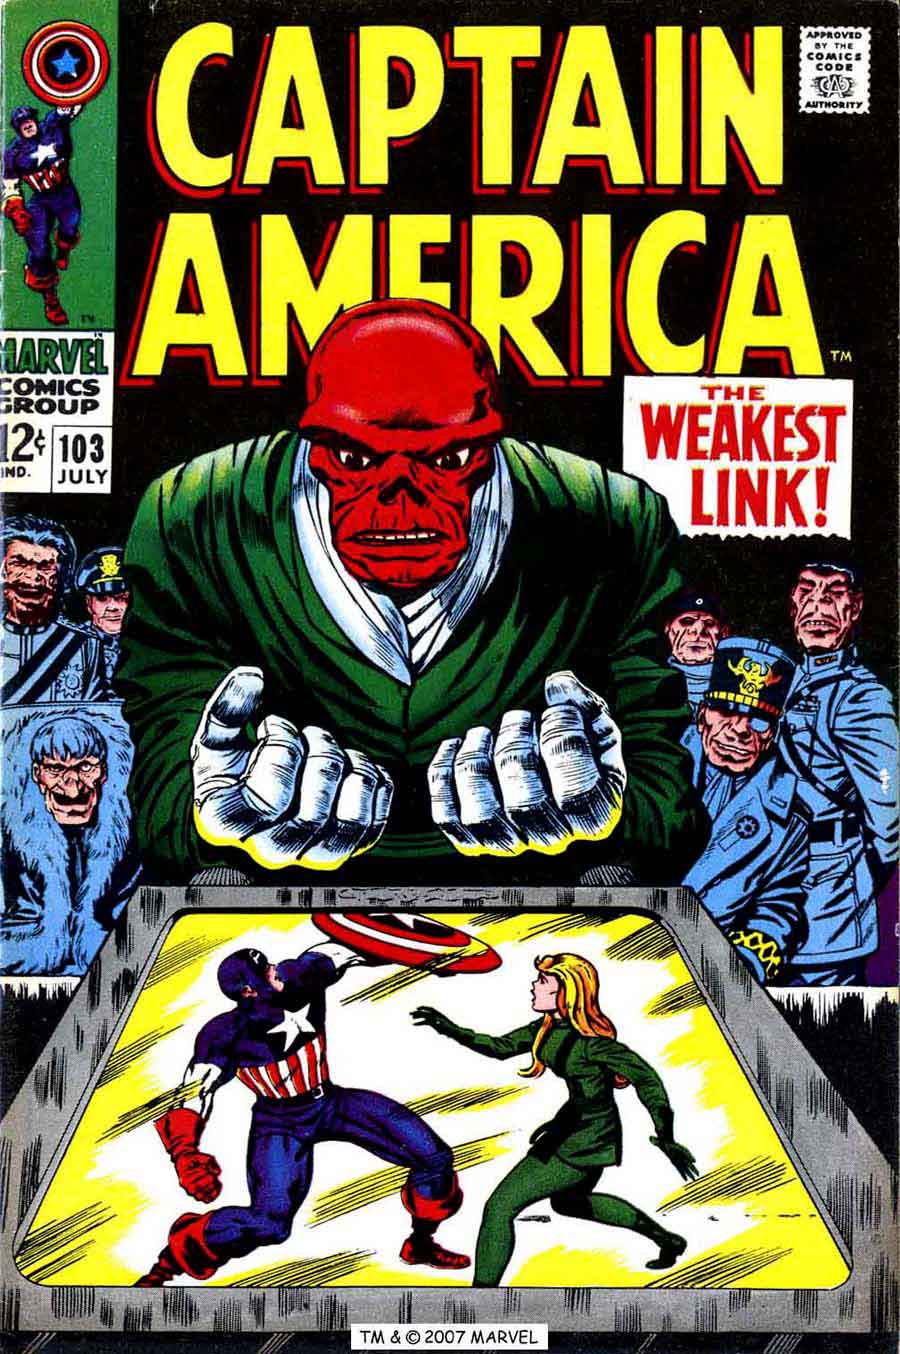 Captain America v1 #103 marvel comic book cover art by Jack Kirby